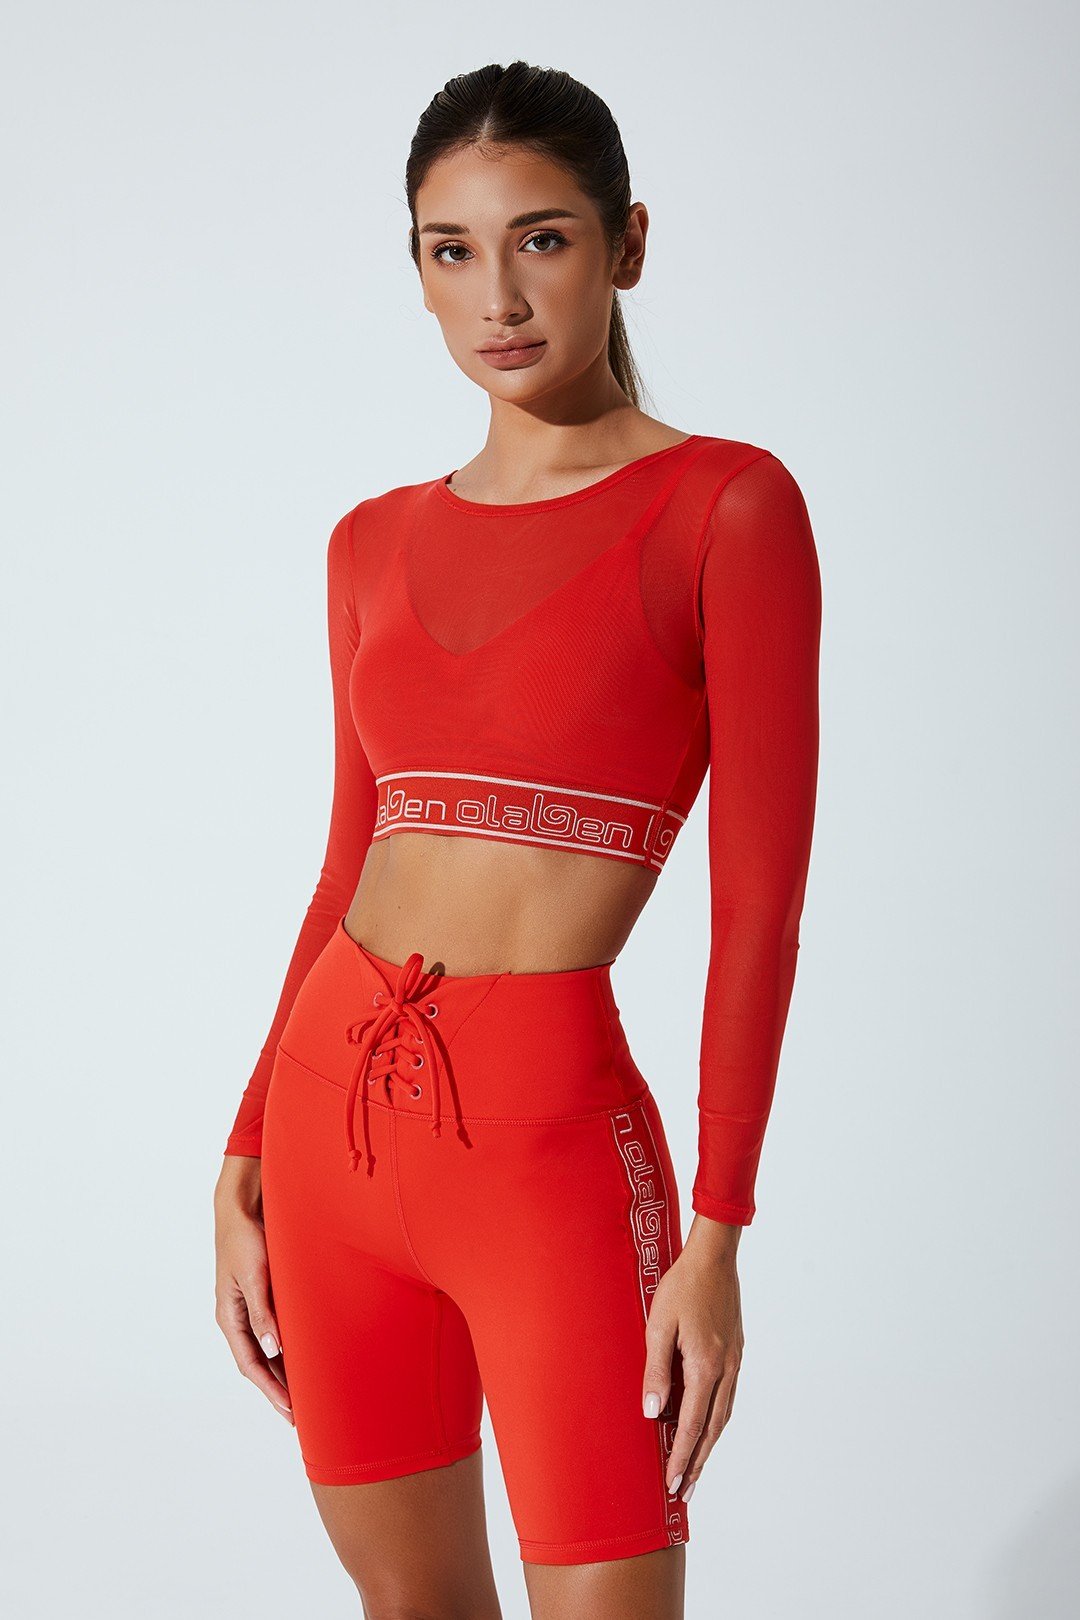 Stylish Kiera biker shorts for women in Venetian red, perfect for a trendy look.